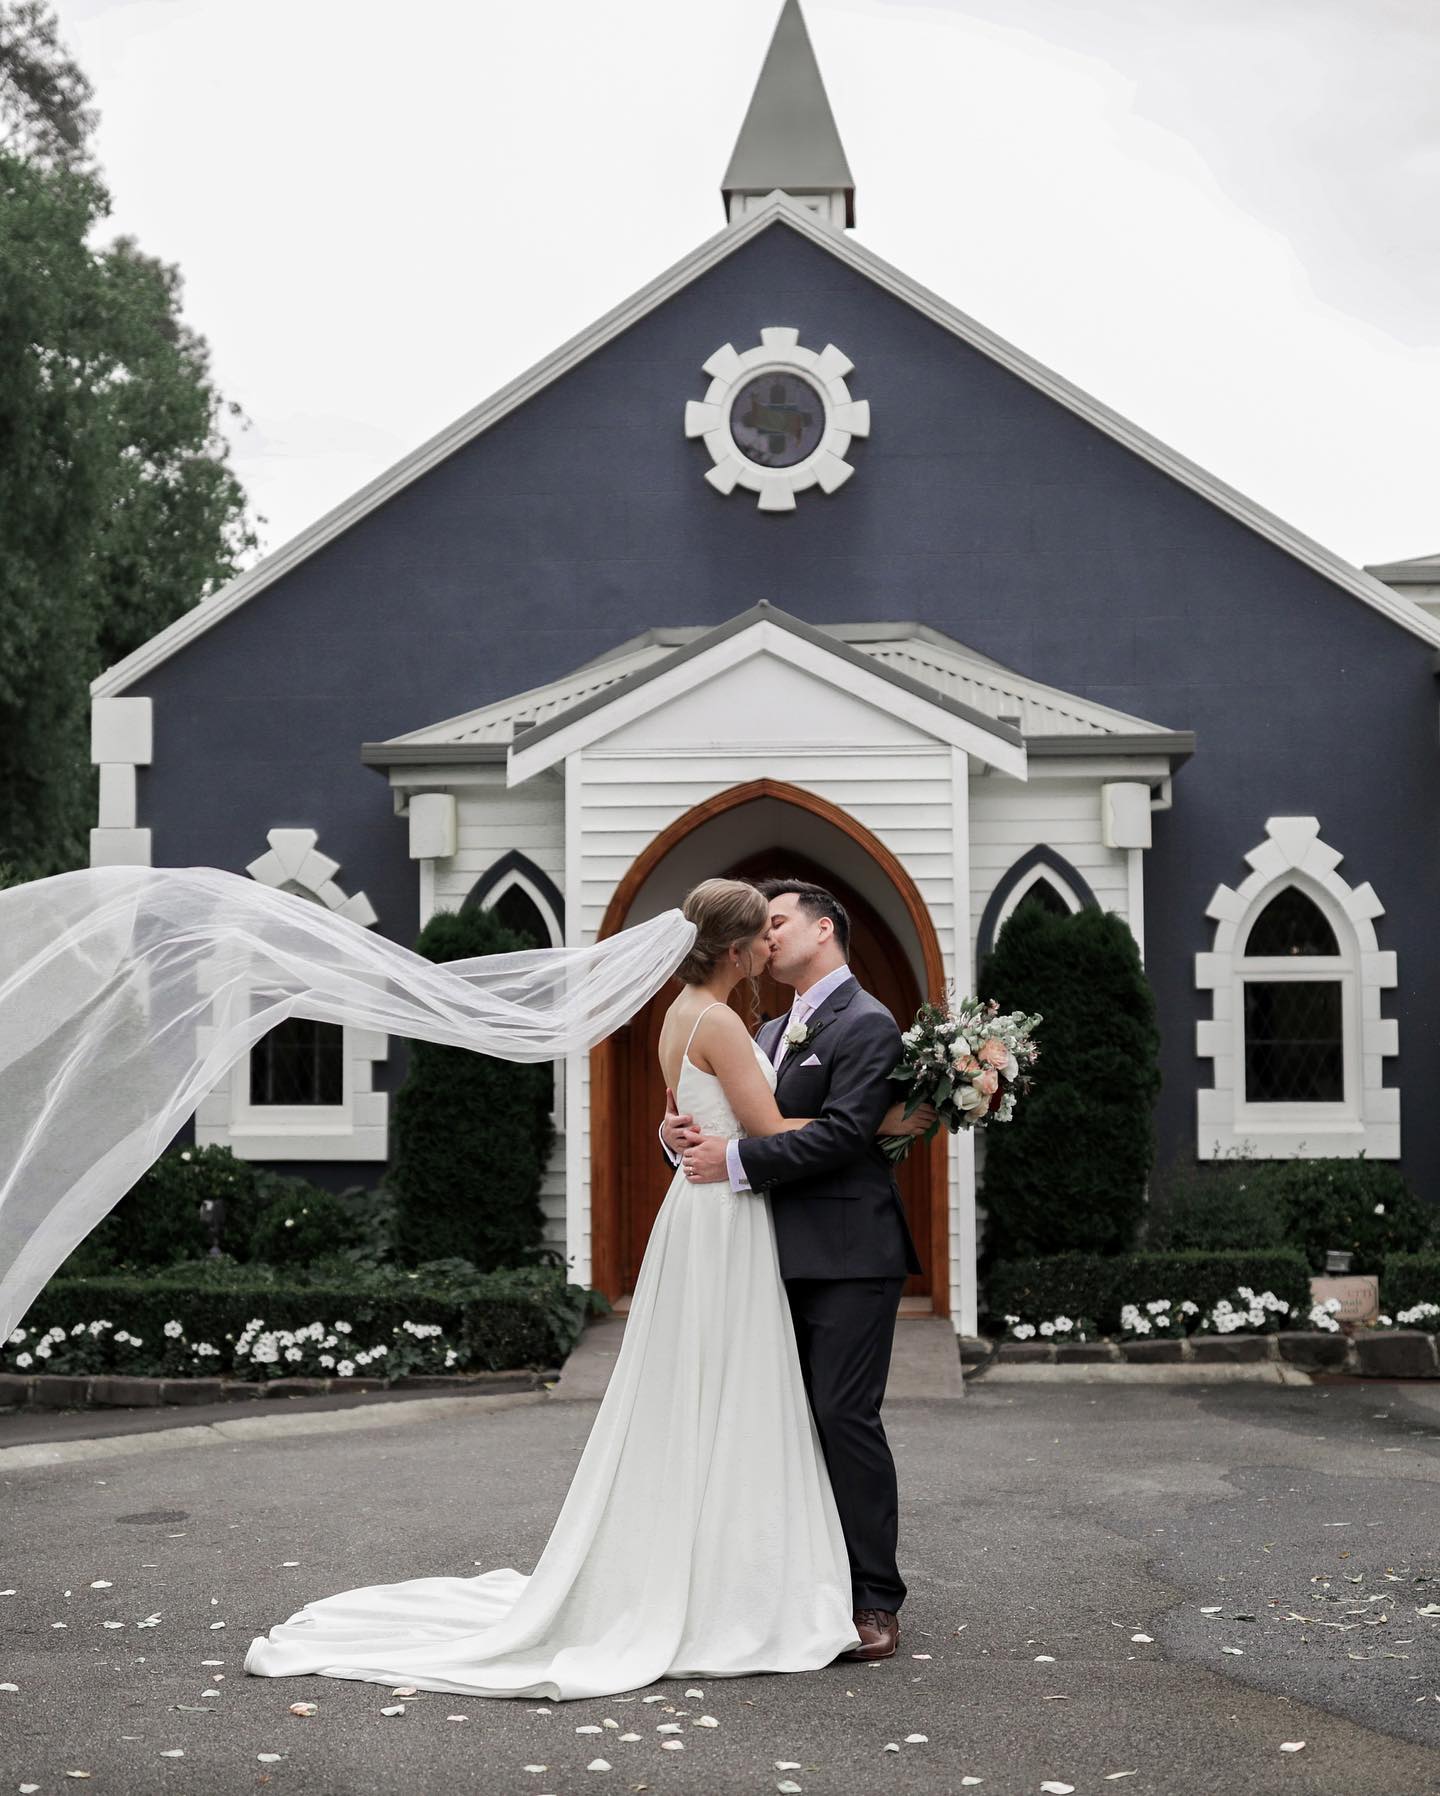 Ballara Receptions - Chelsea & Daniel - Yarra Valley Wedding 2022 - Good Moments Photography